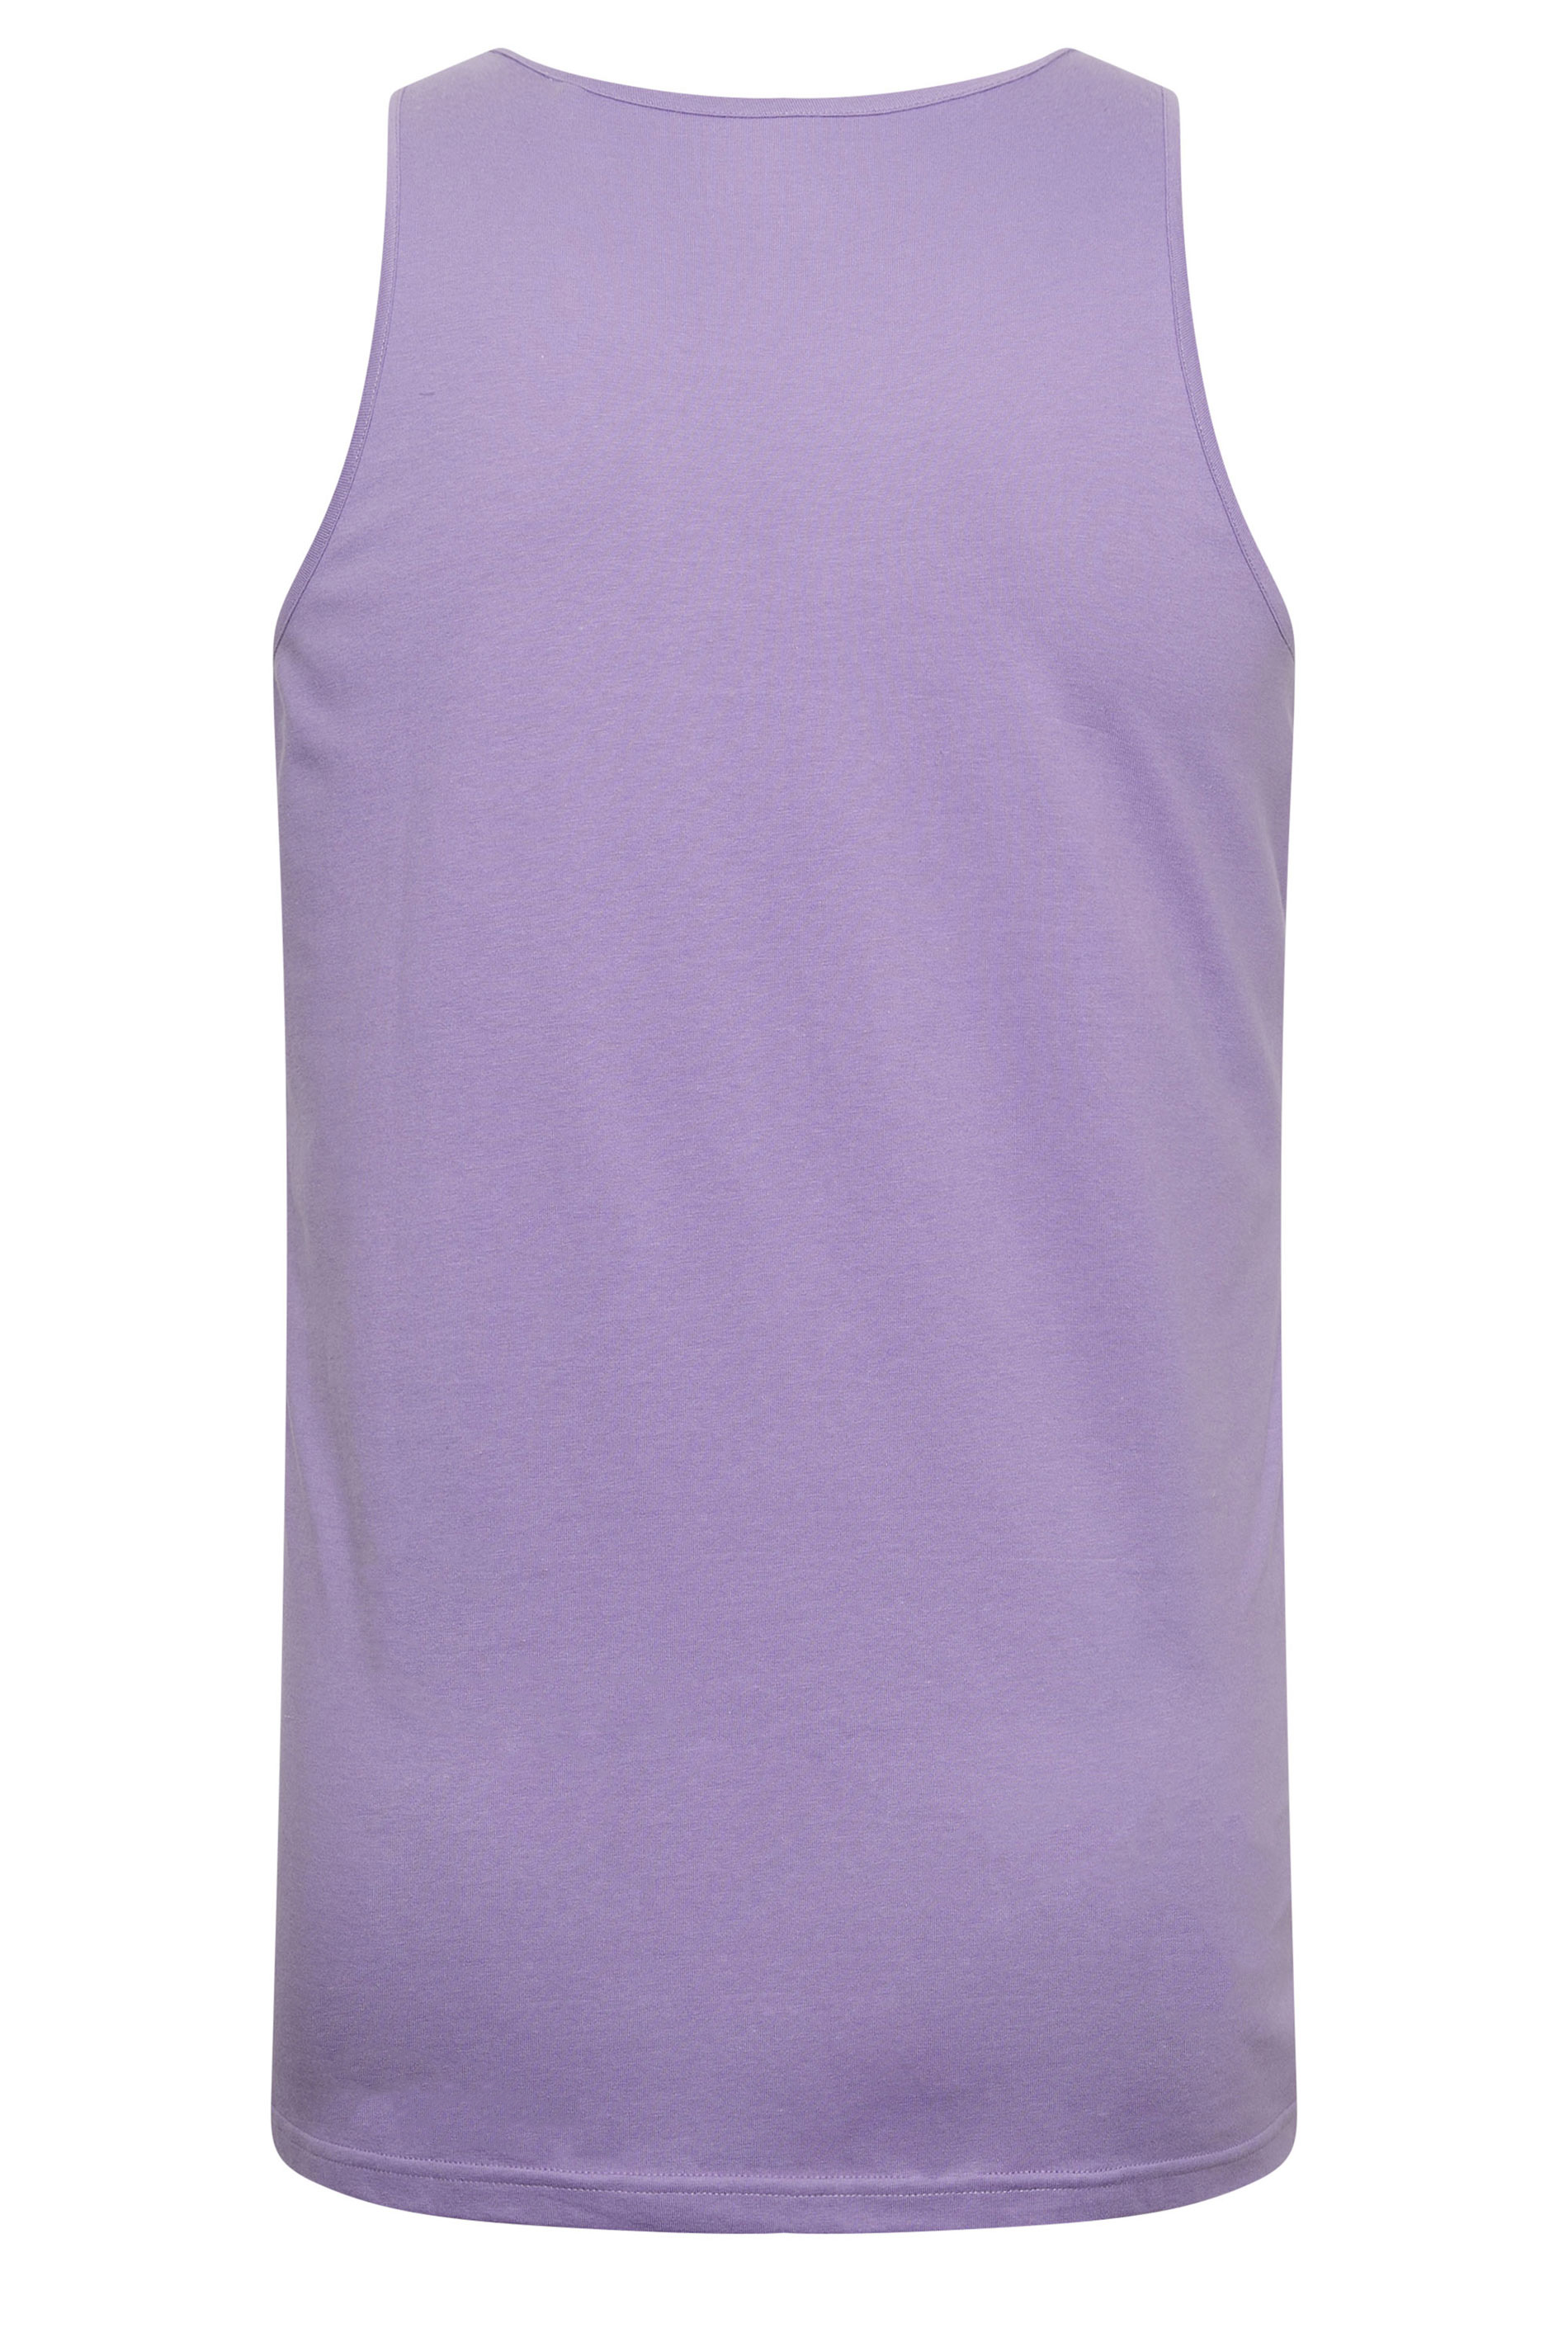 BadRhino Big & Tall Chalk Violet Purple Vest | BadRhino 3